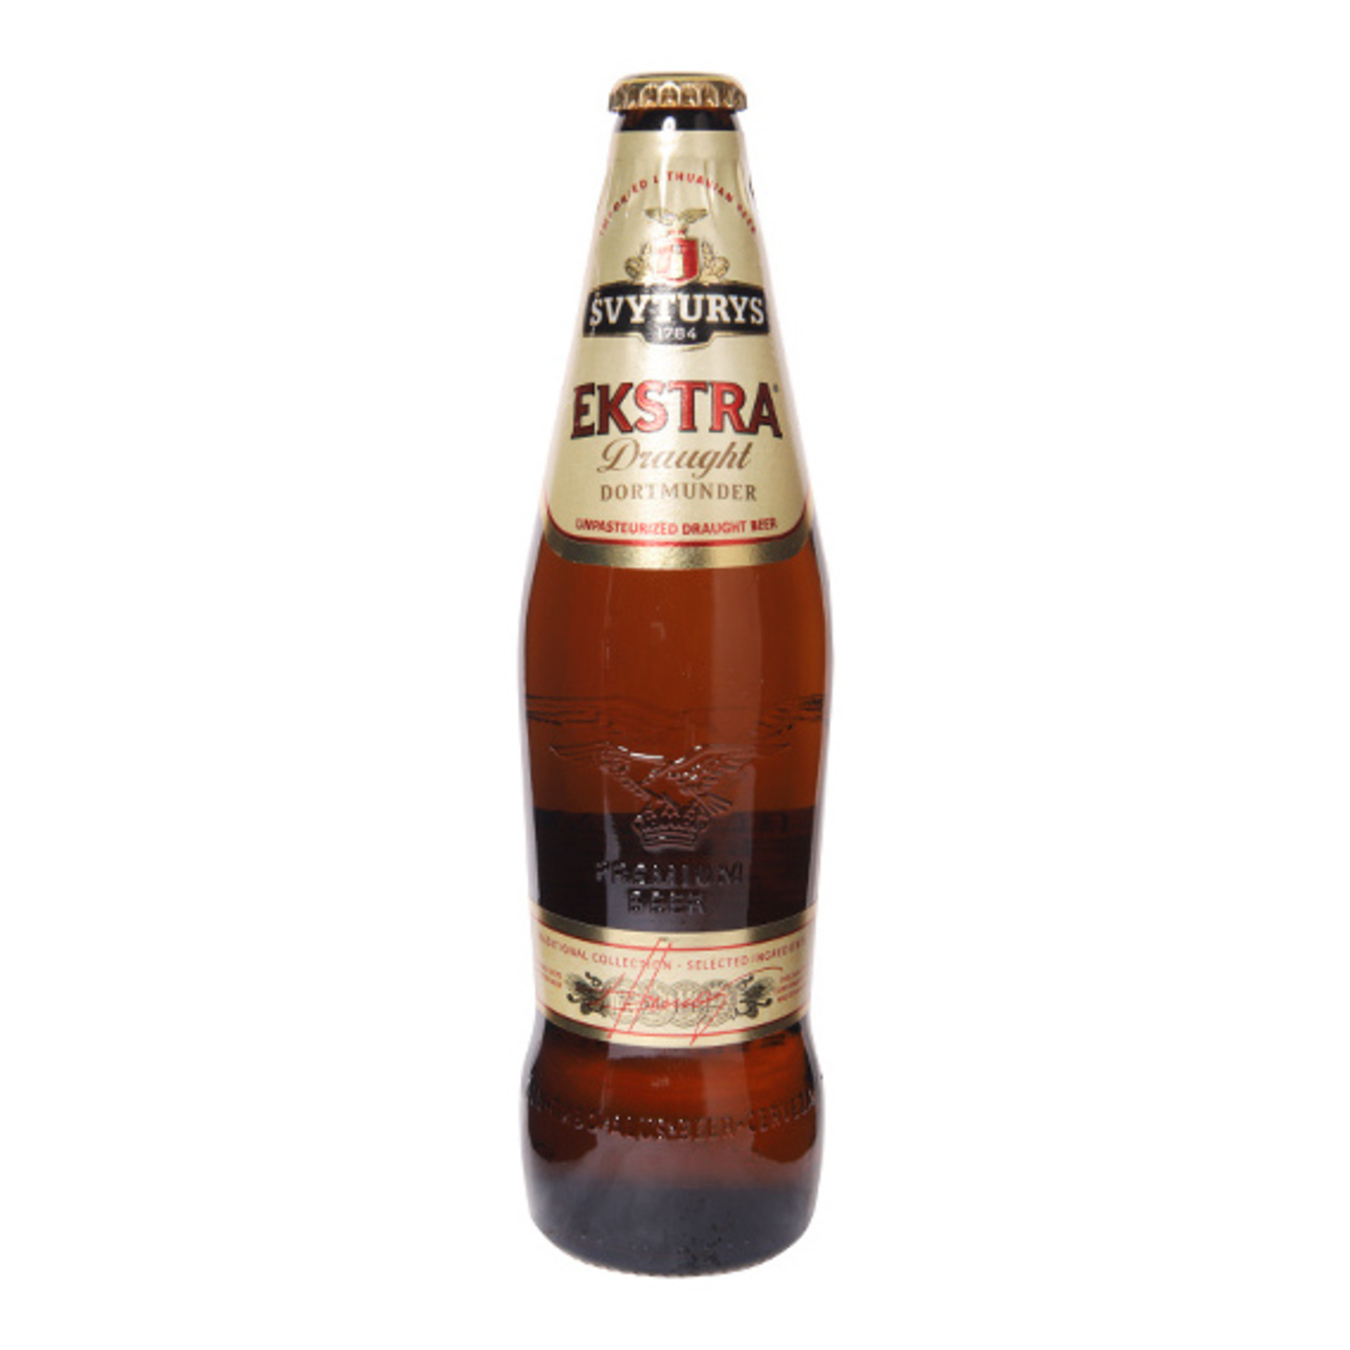 Beer Svyturus Ekstra Draught Dortmunder light 5,2% 0,5l